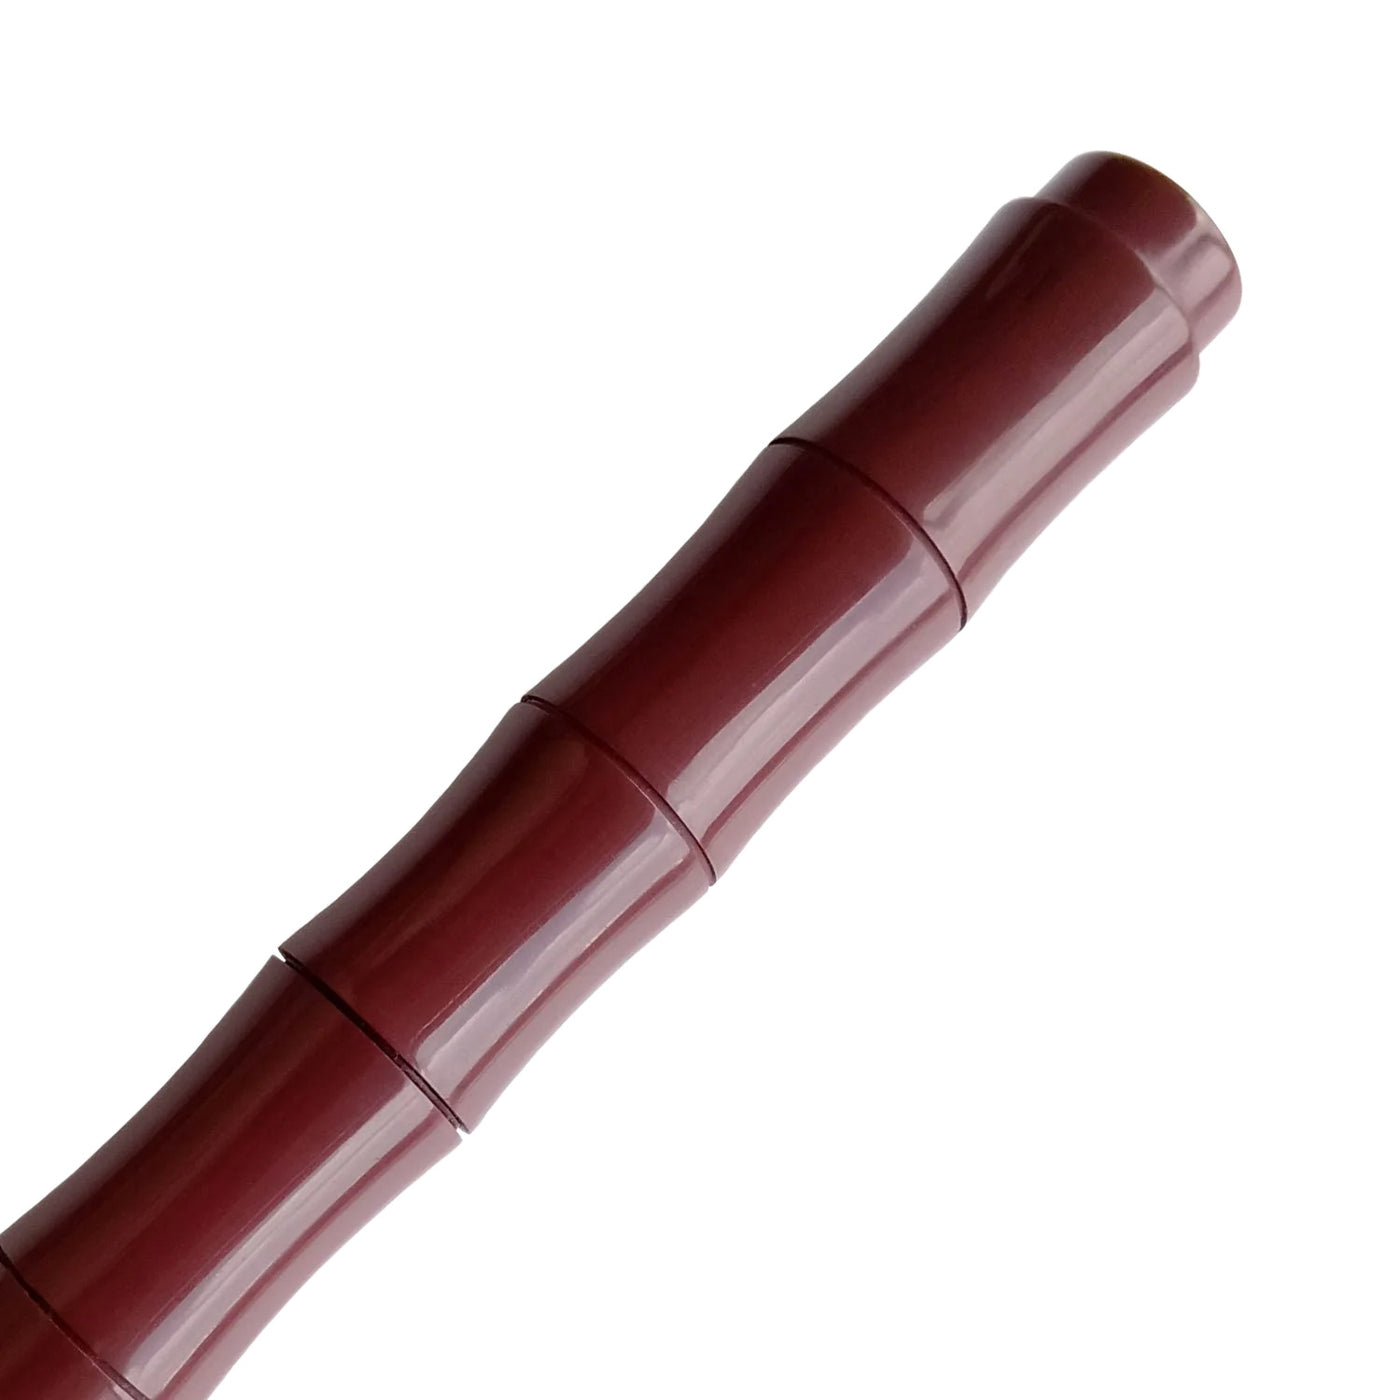 Ranga Giant Bamboo Regular Ebonite Fountain Pen, Solid Chocolate Brown - Steel Nib